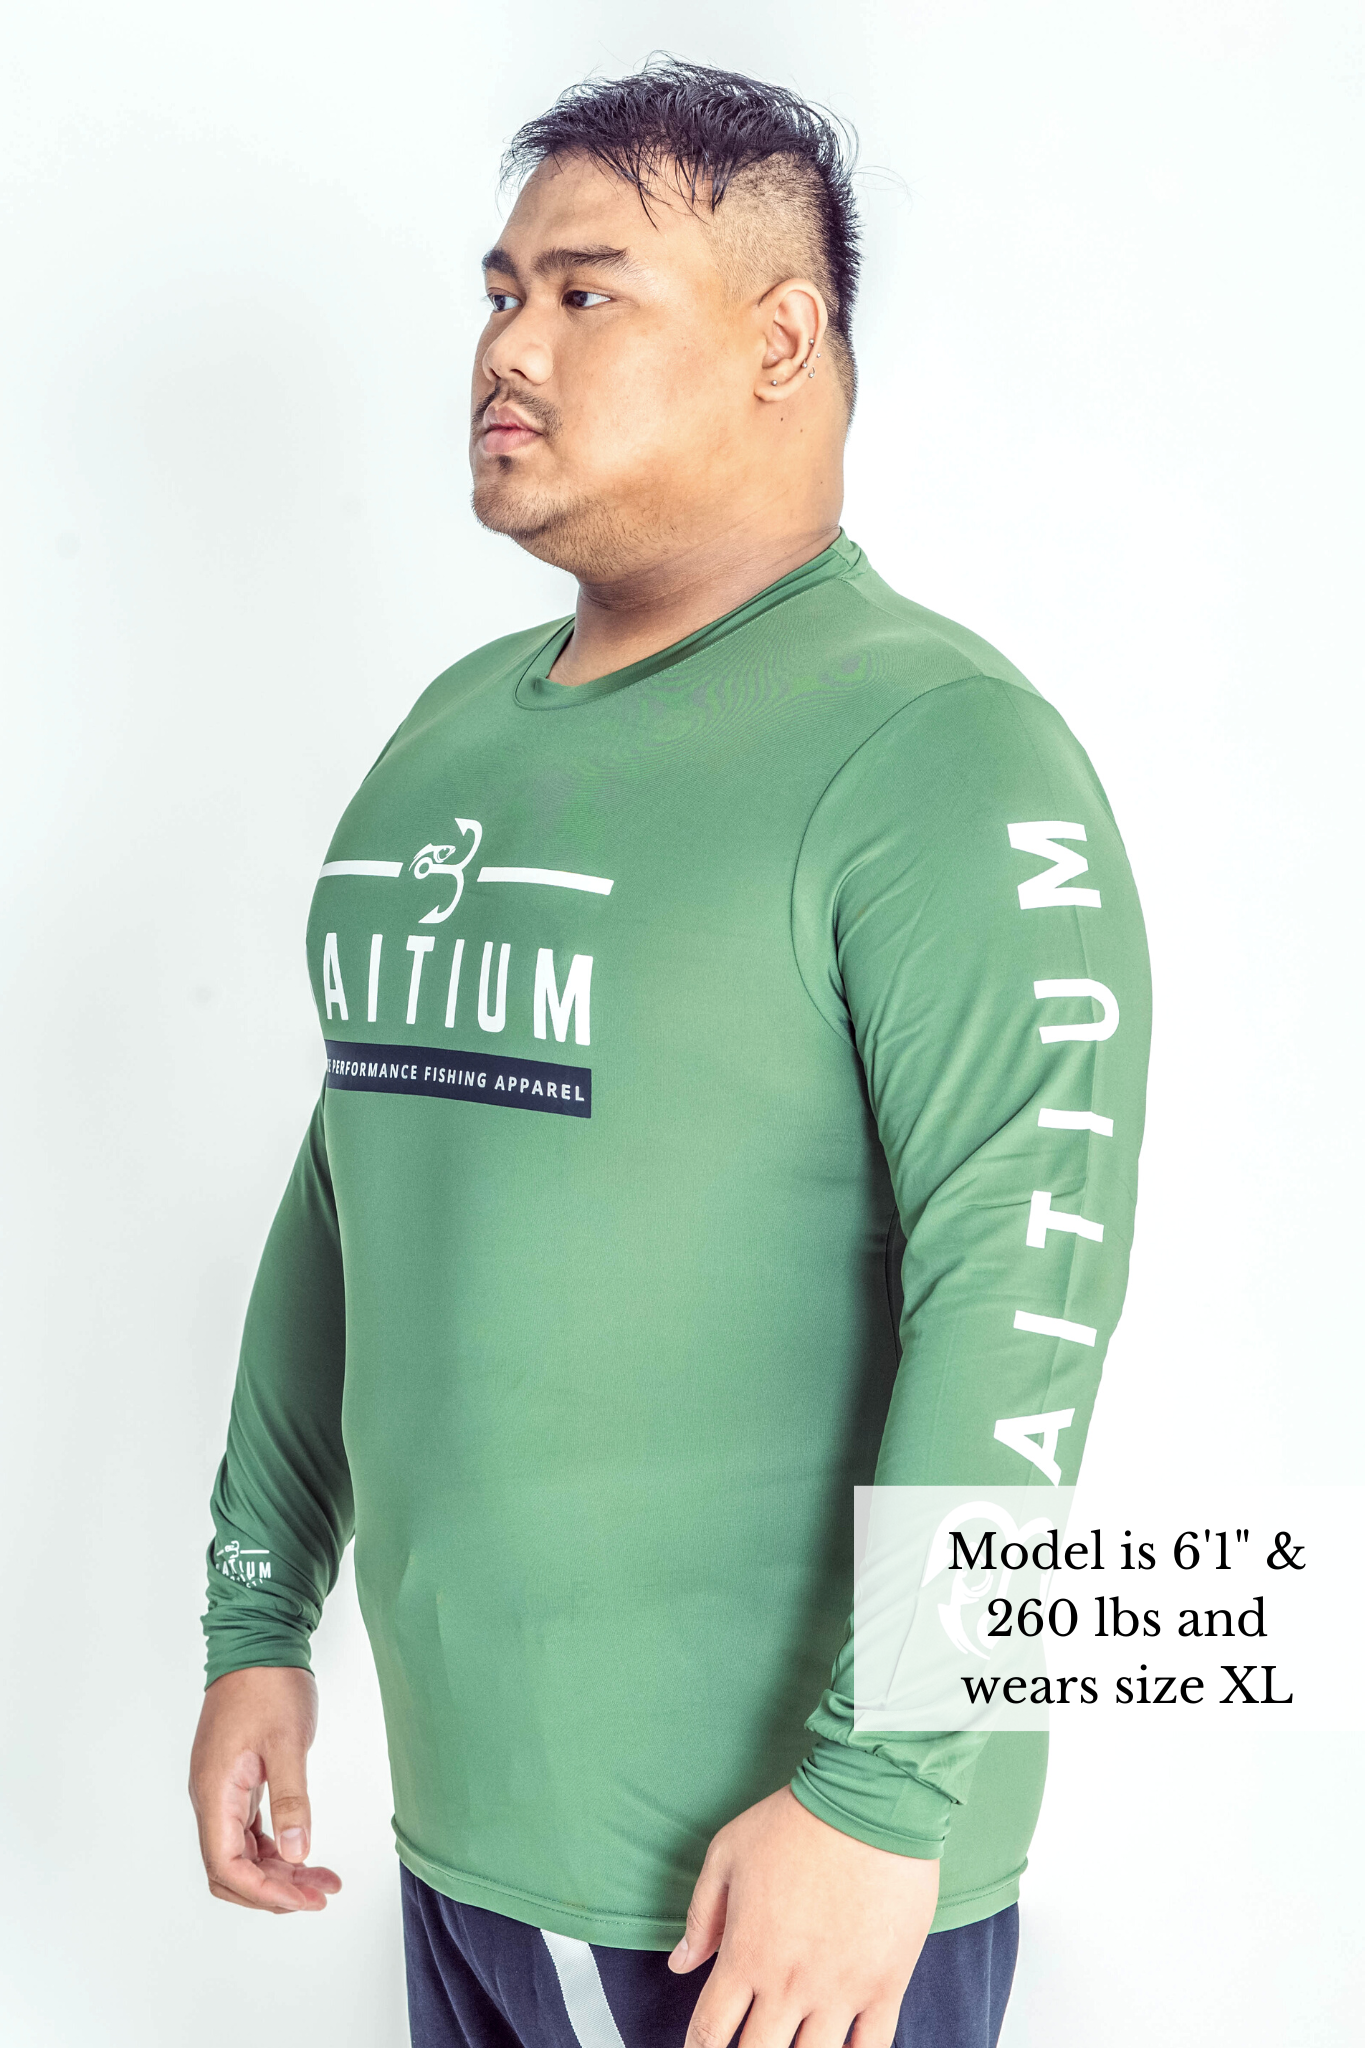 HDE Performance Fishing Shirts for Men - Long Sleeve UPF 50 Sun